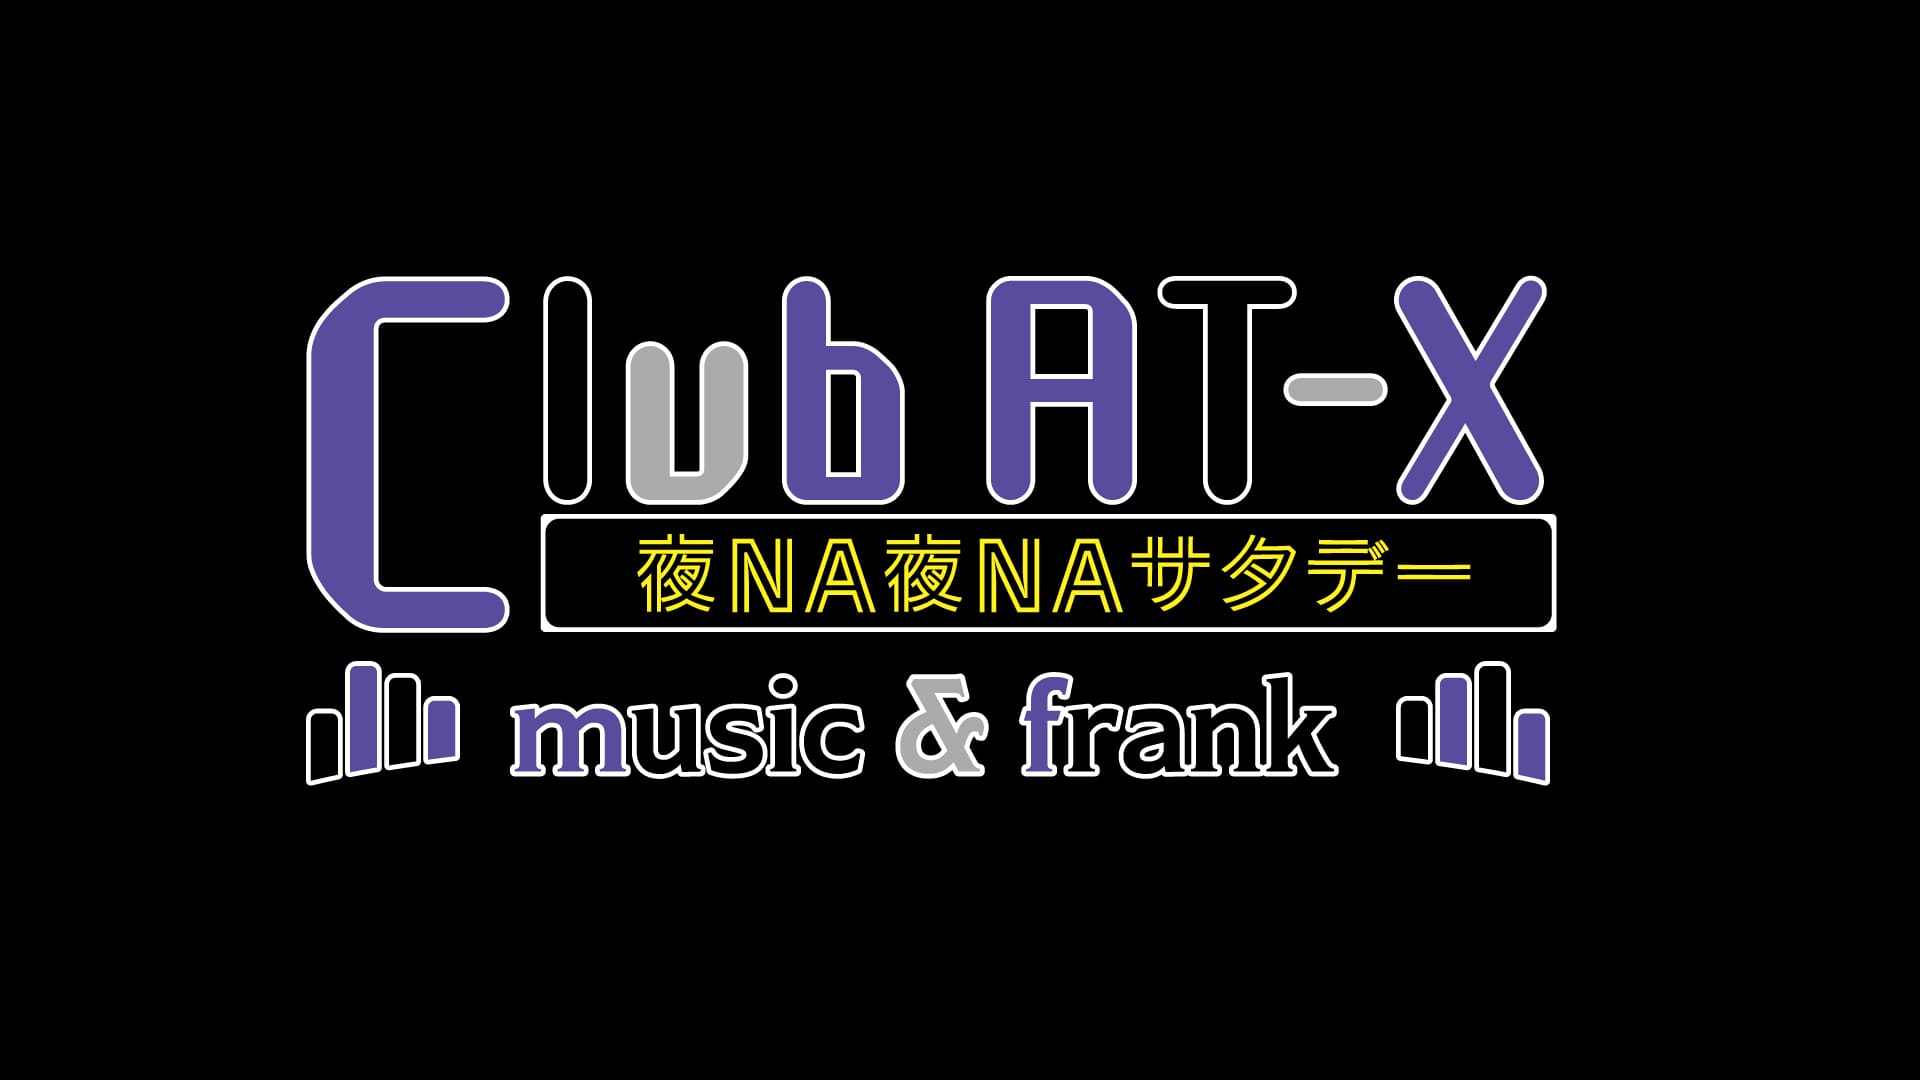 Club AT-X 夜NA夜NAサタデー music&frank